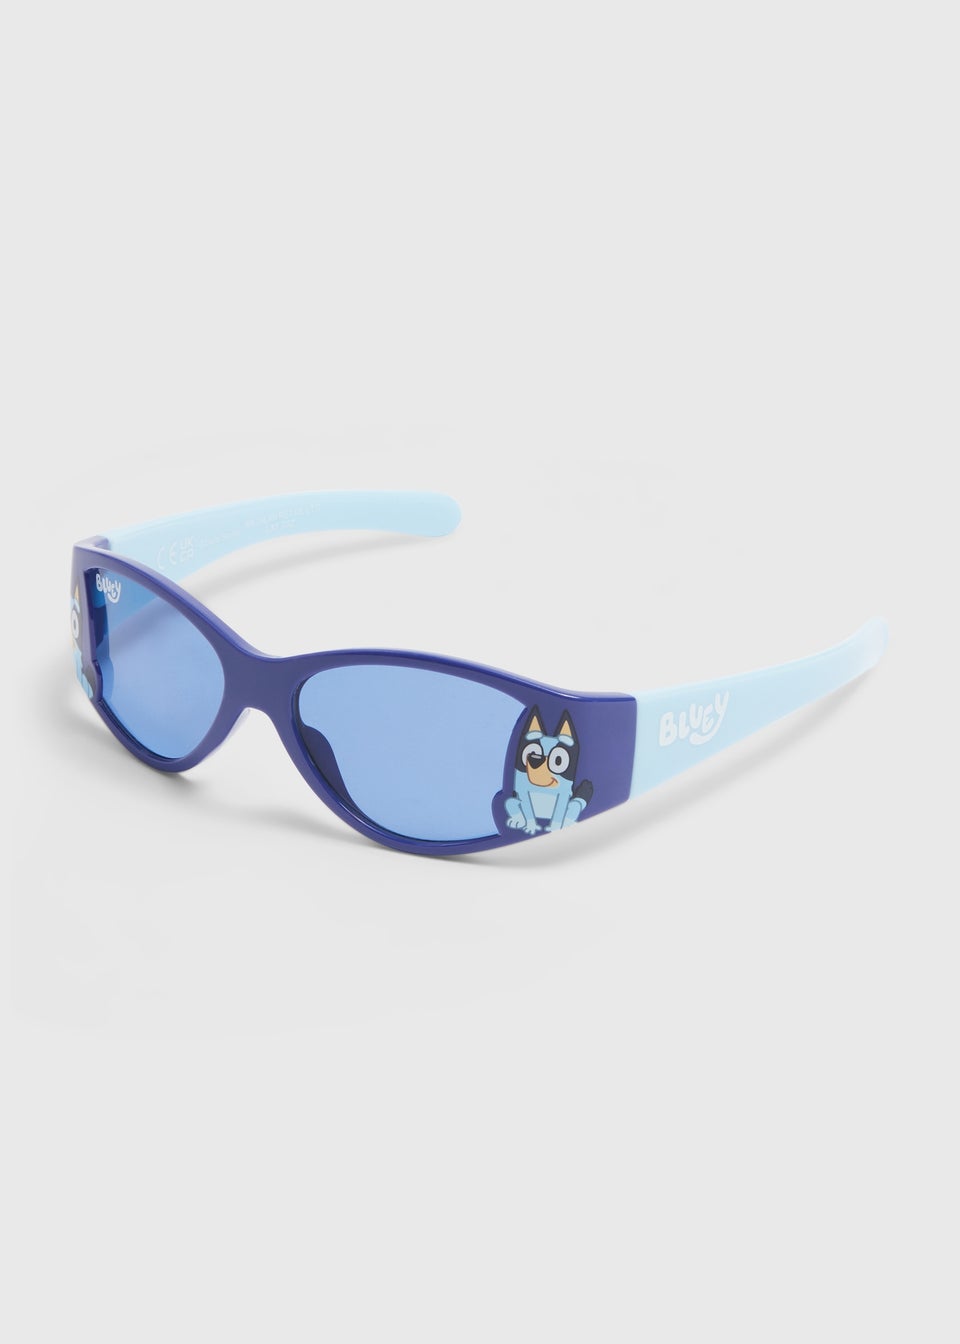 Bluey Boys Blue Sunglasses